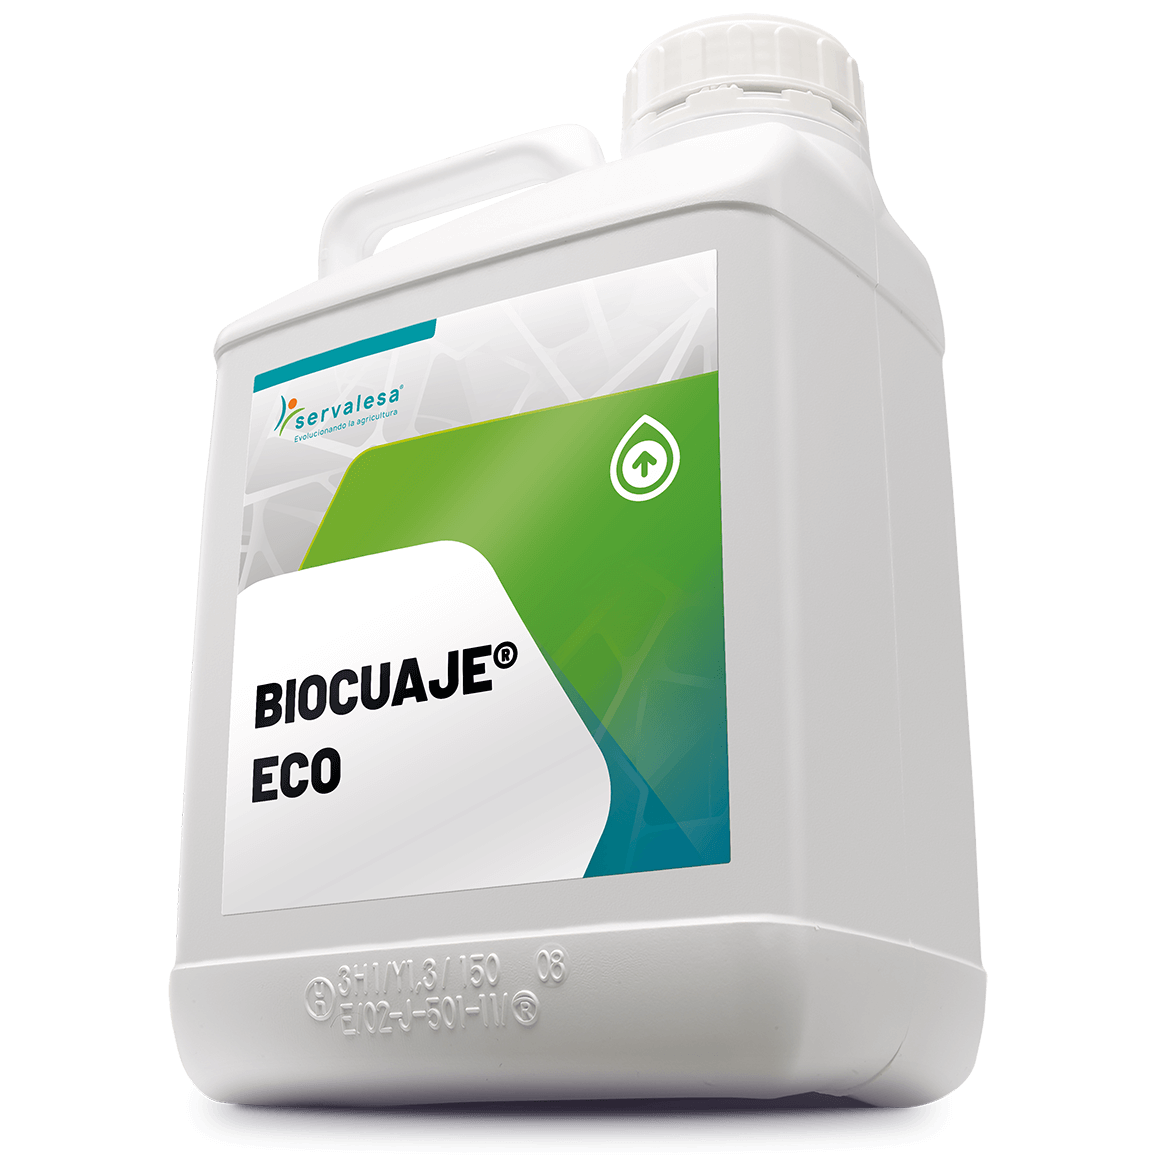 Bioestimulantes-BIOCUAJE-ECO-5L-Servalesa